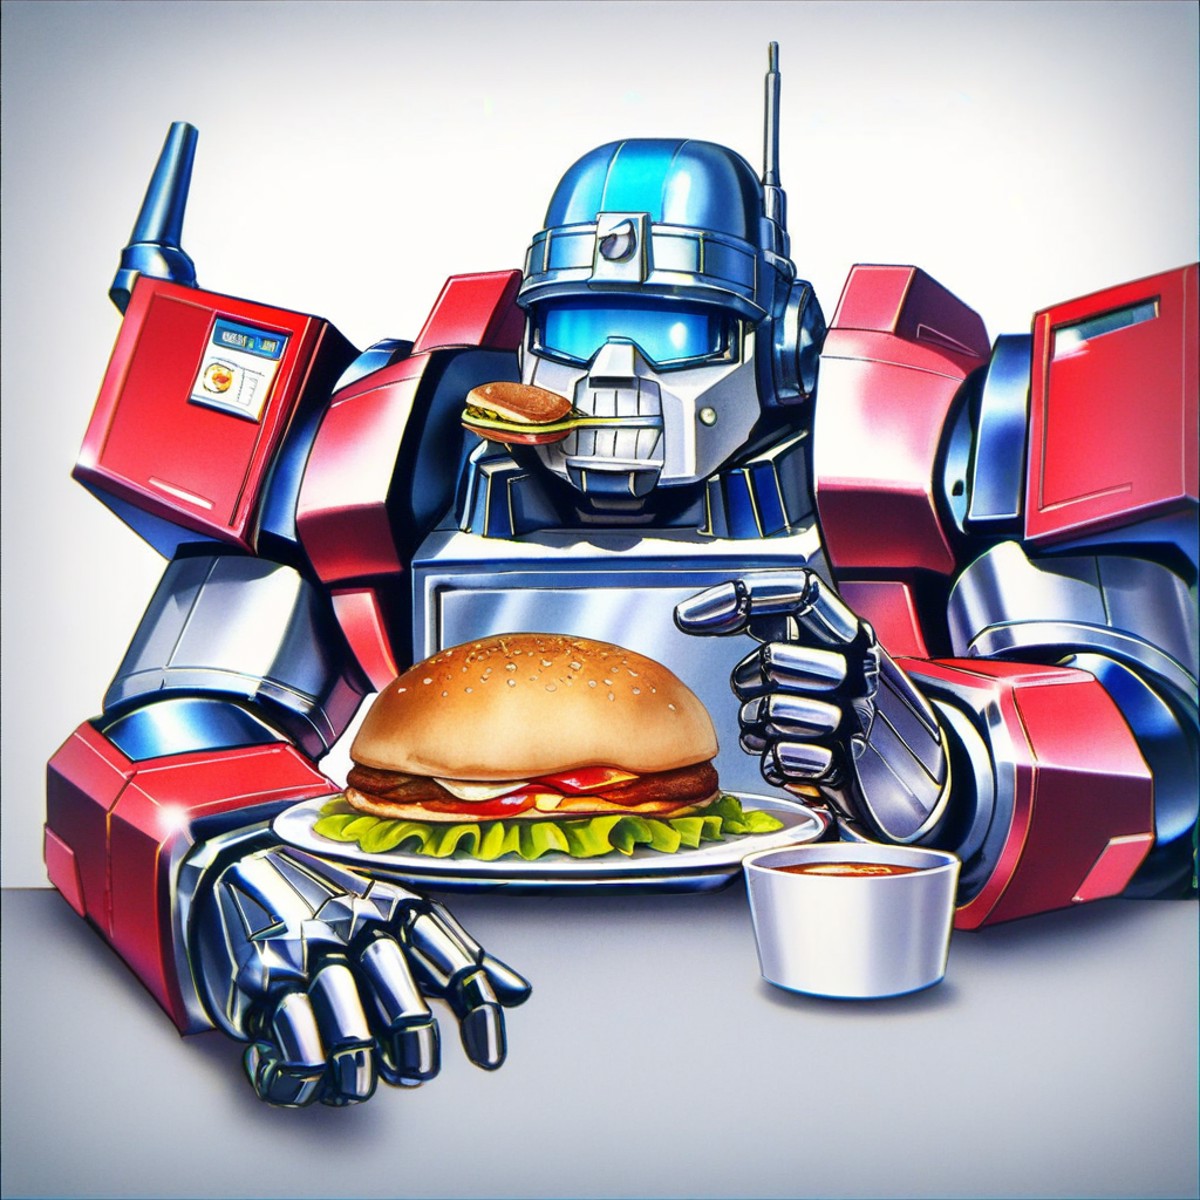 (transformers:0.5), eating hamburger
score_8_up  <lora:Transformers G1 Boxart:1>